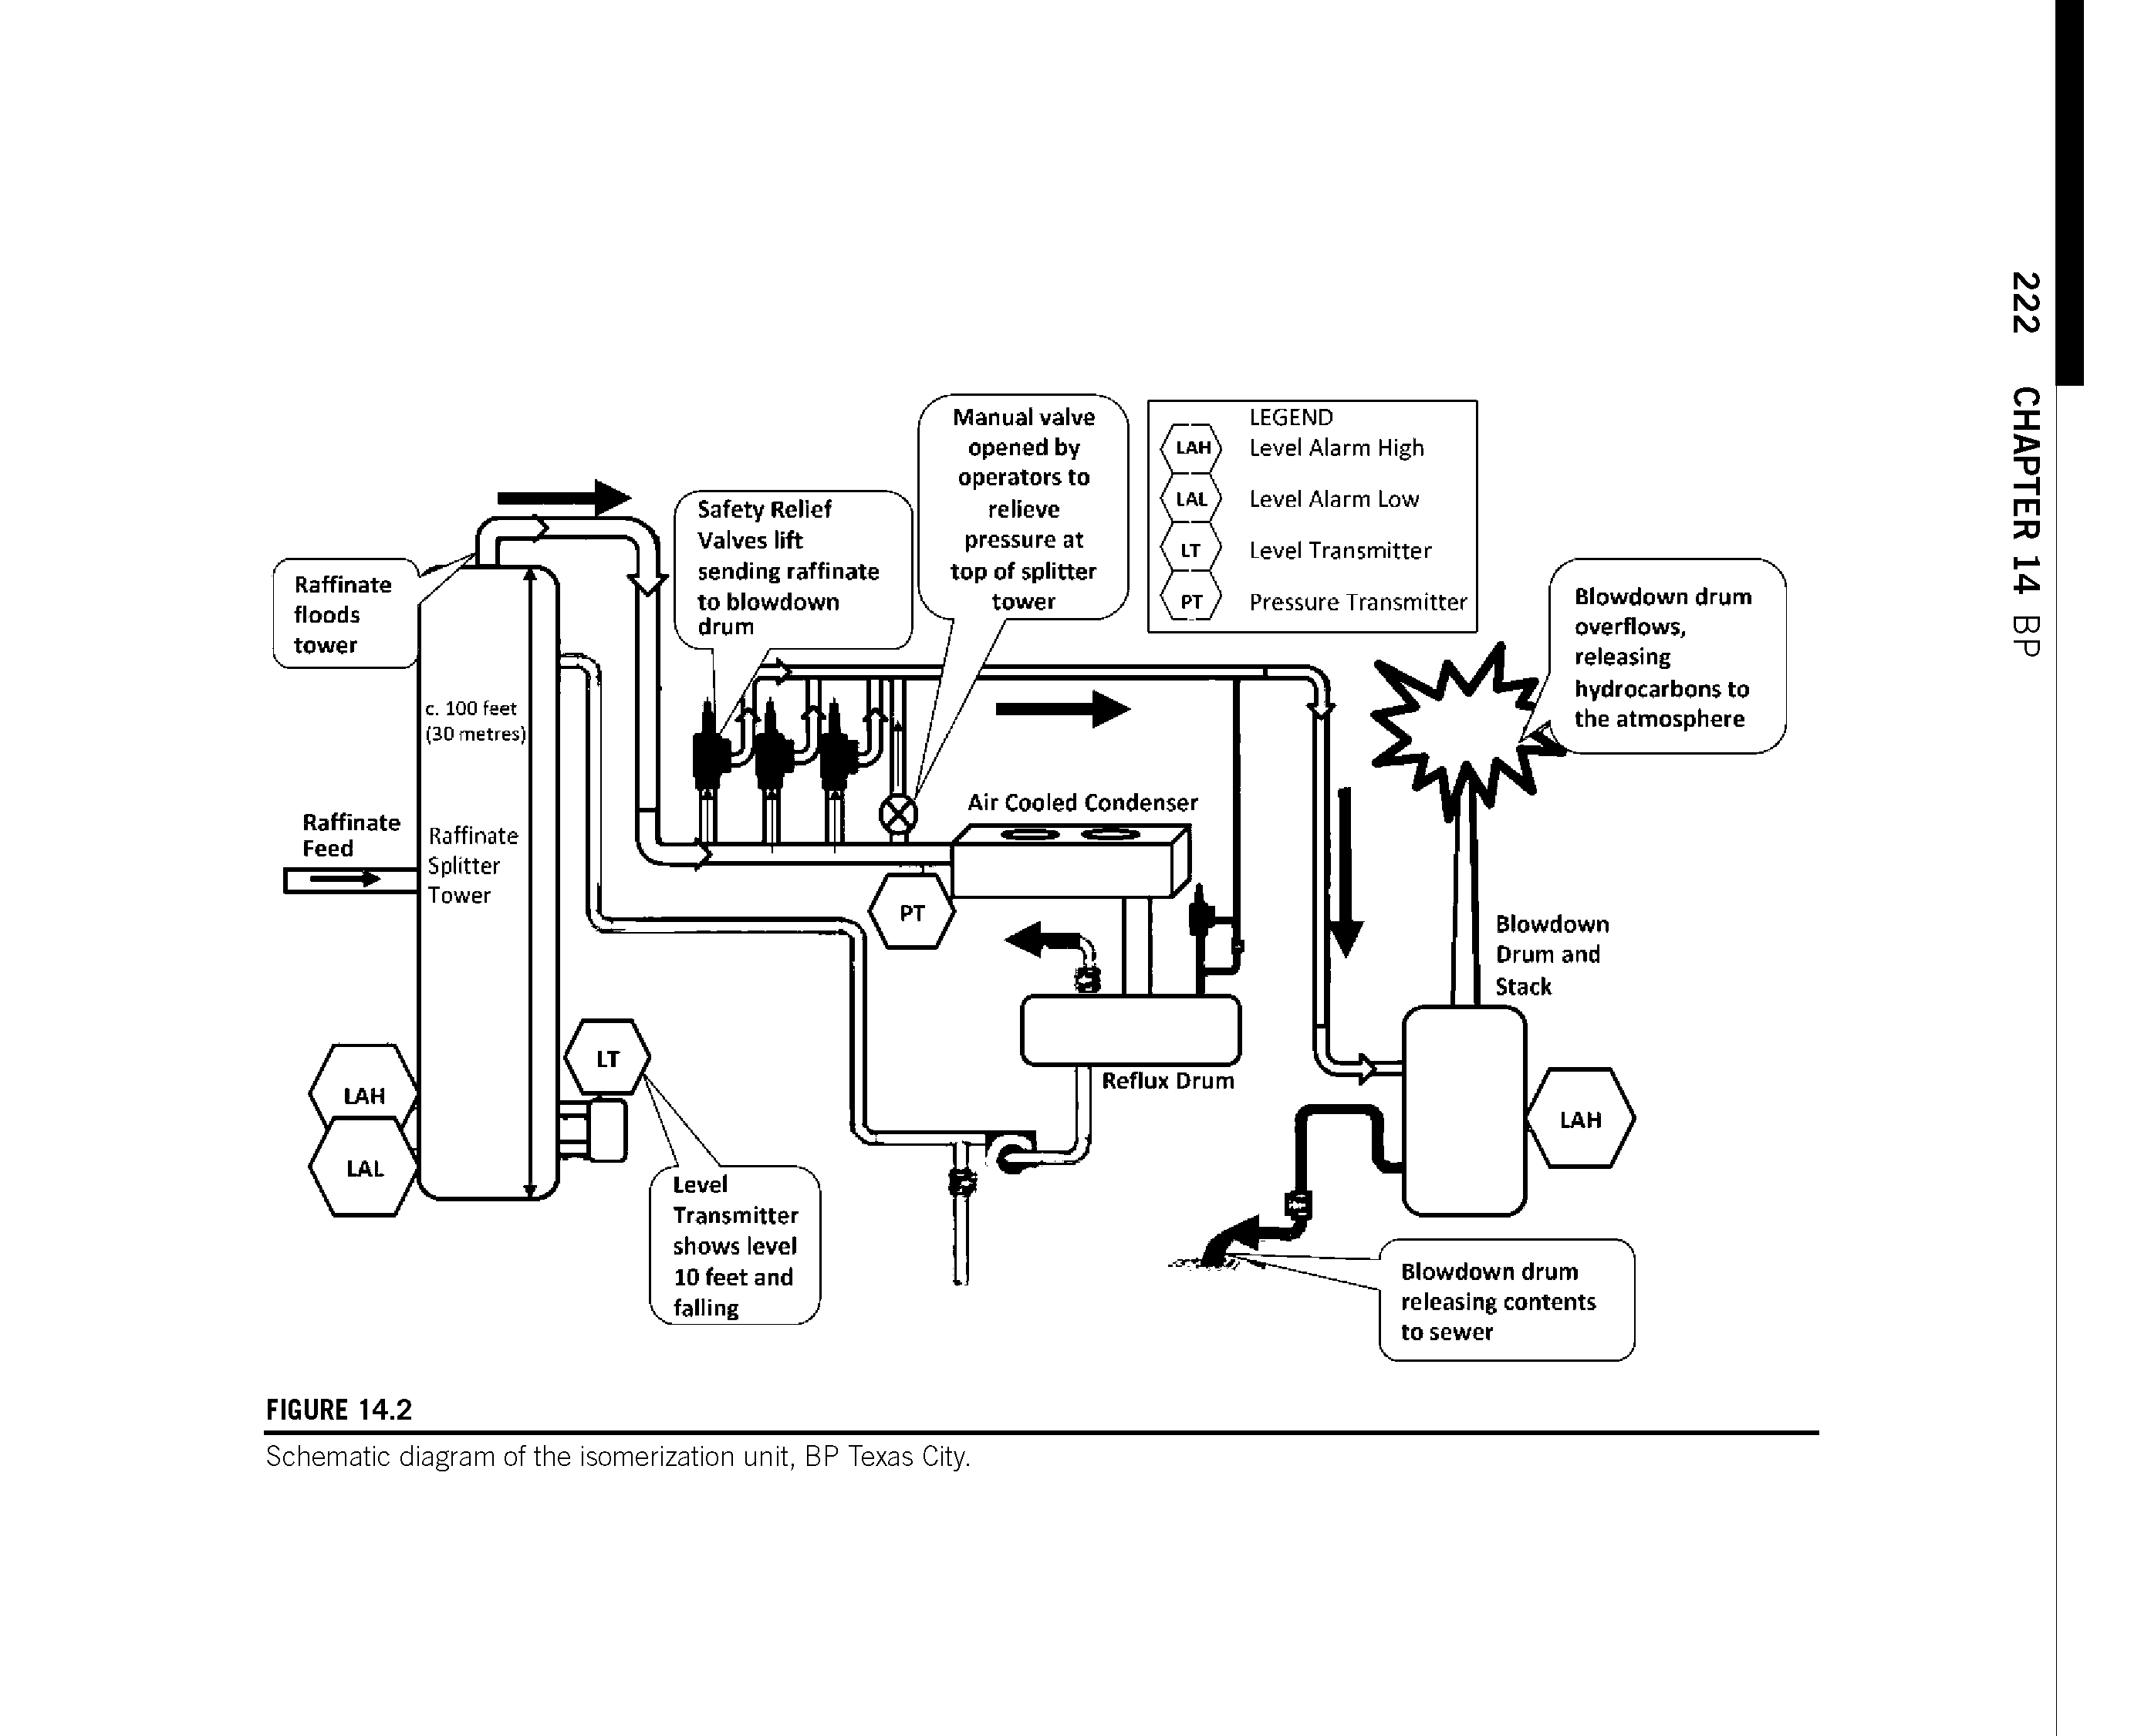 Schematic diagram of the isomerization unit, BP Texas City.